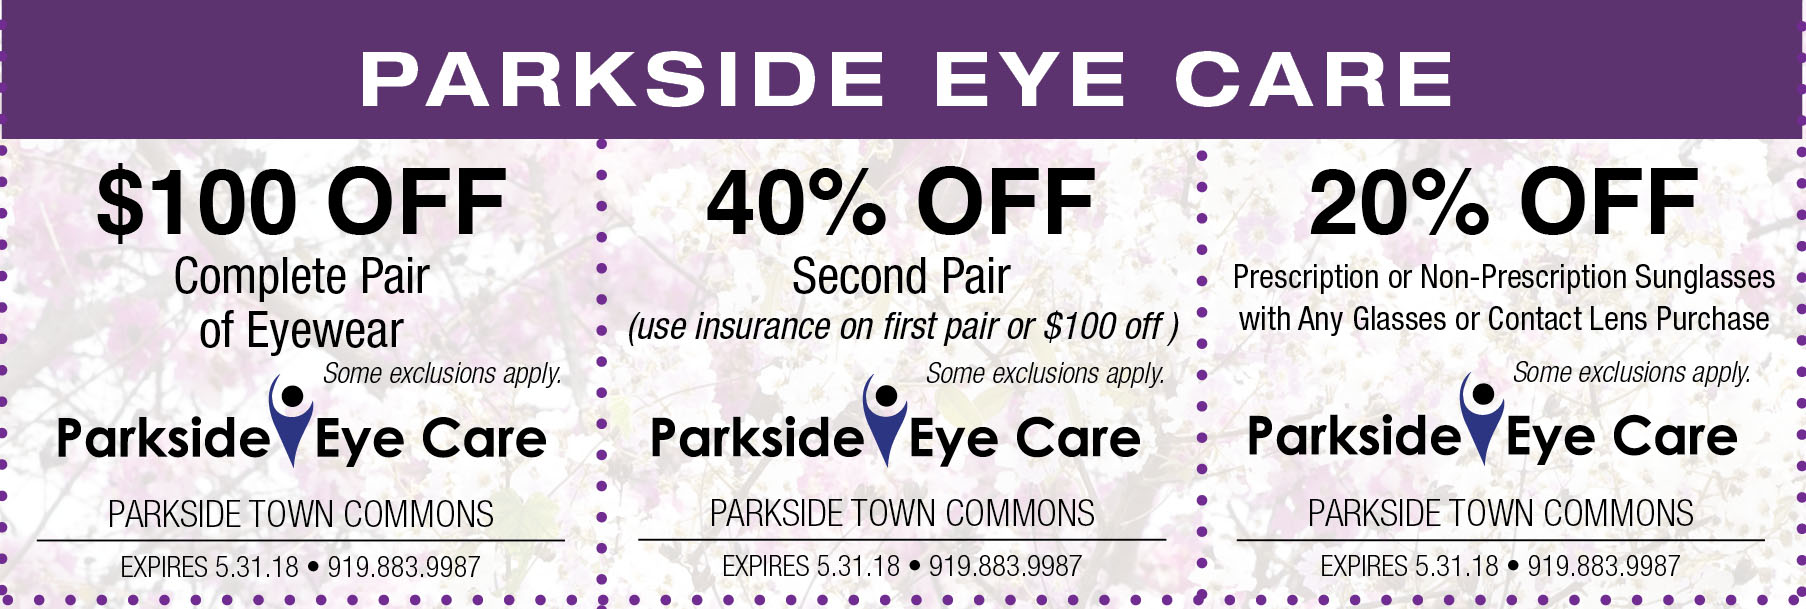 PTC Parkside Eye Care.jpg